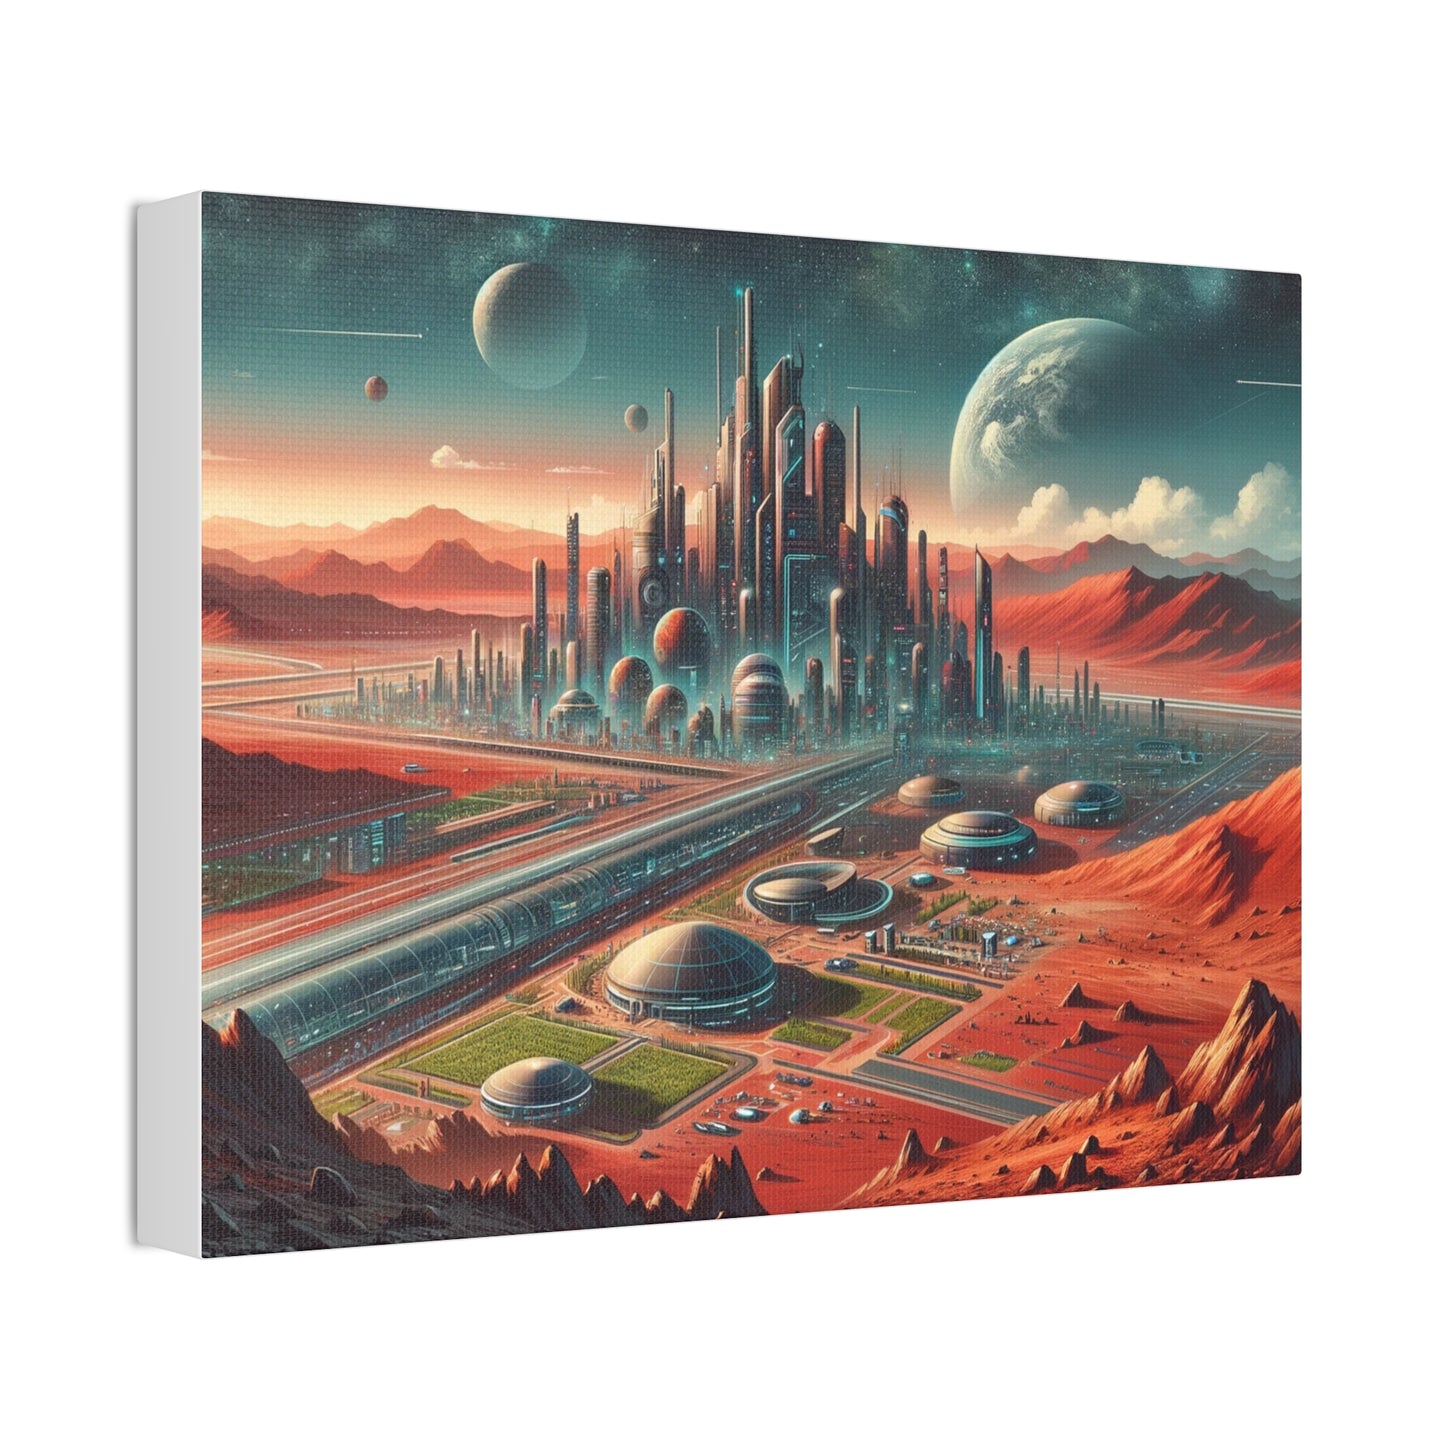 Martian Metropolis: Futuristic City on Mars Canvas Art